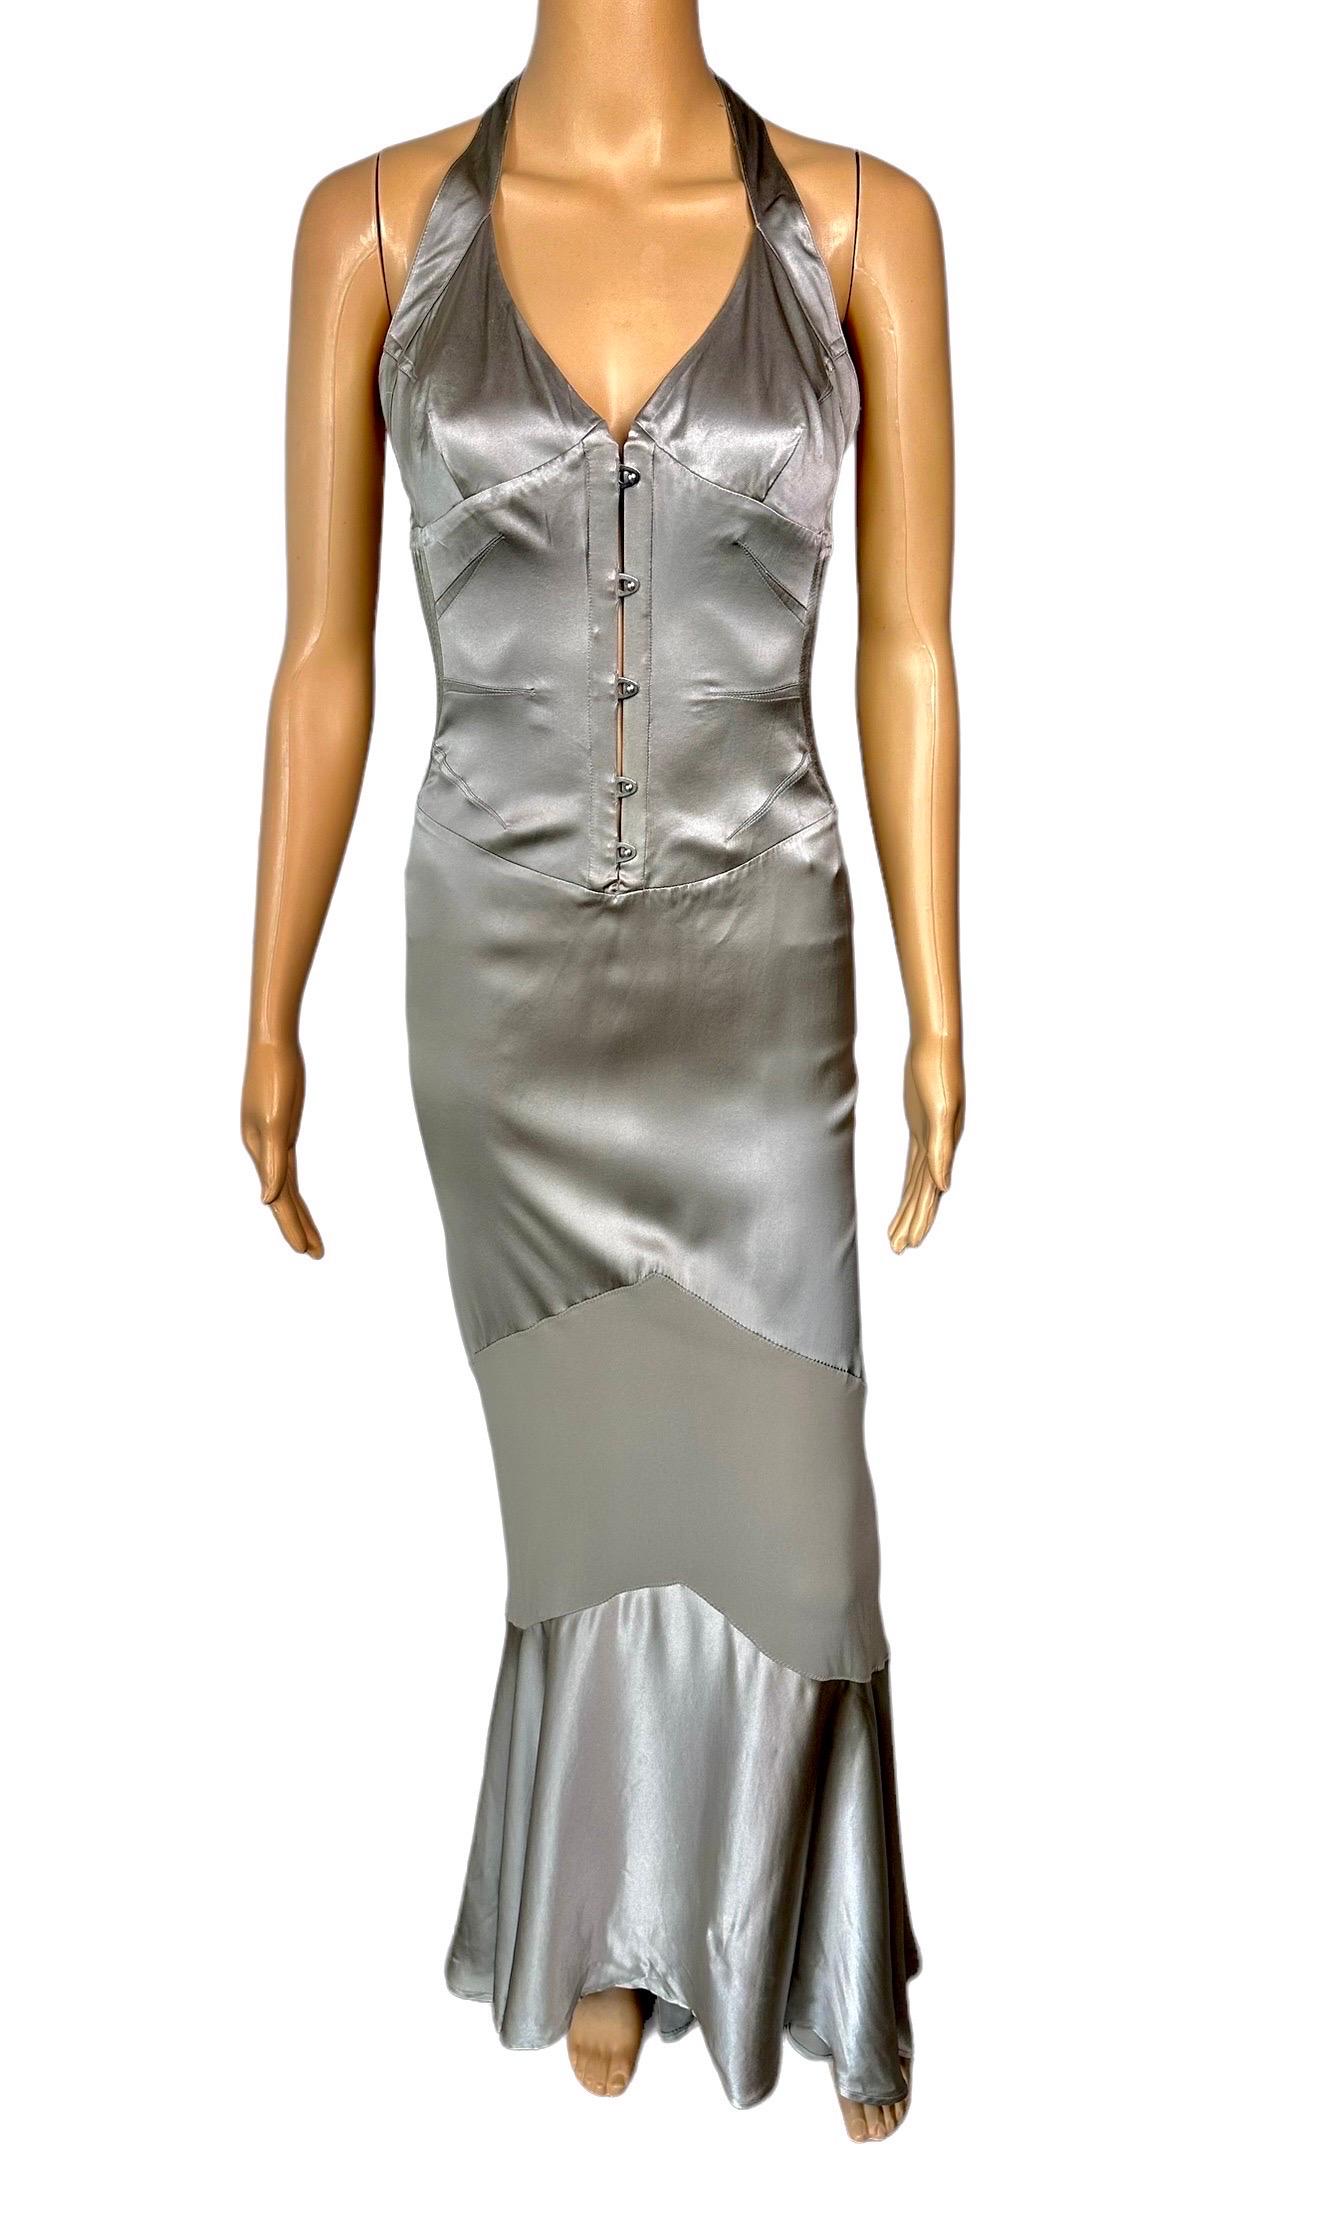 Roberto Cavalli S/S 2003 Corset Plunged Décolleté Sheer Panels Open Back Silver Evening Dress Gown Size M


